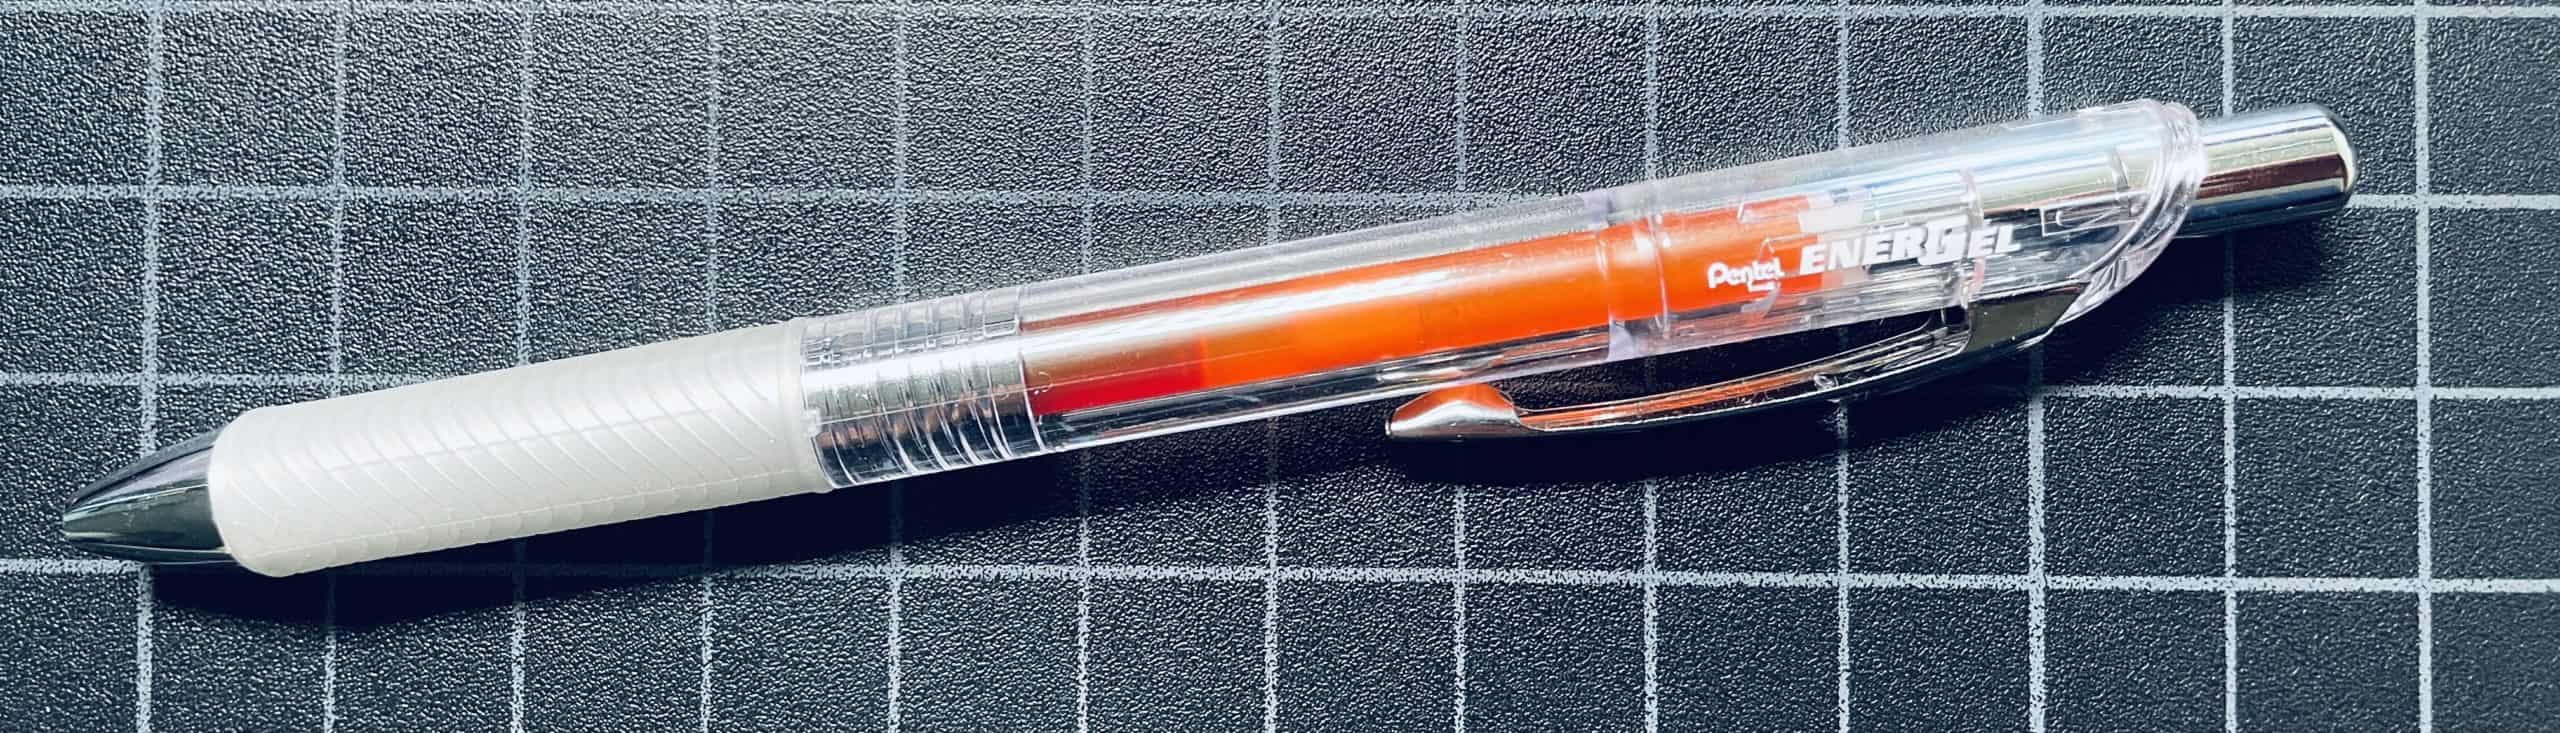 Great Bargain: Pentel Retractable Gel Pen Bulk